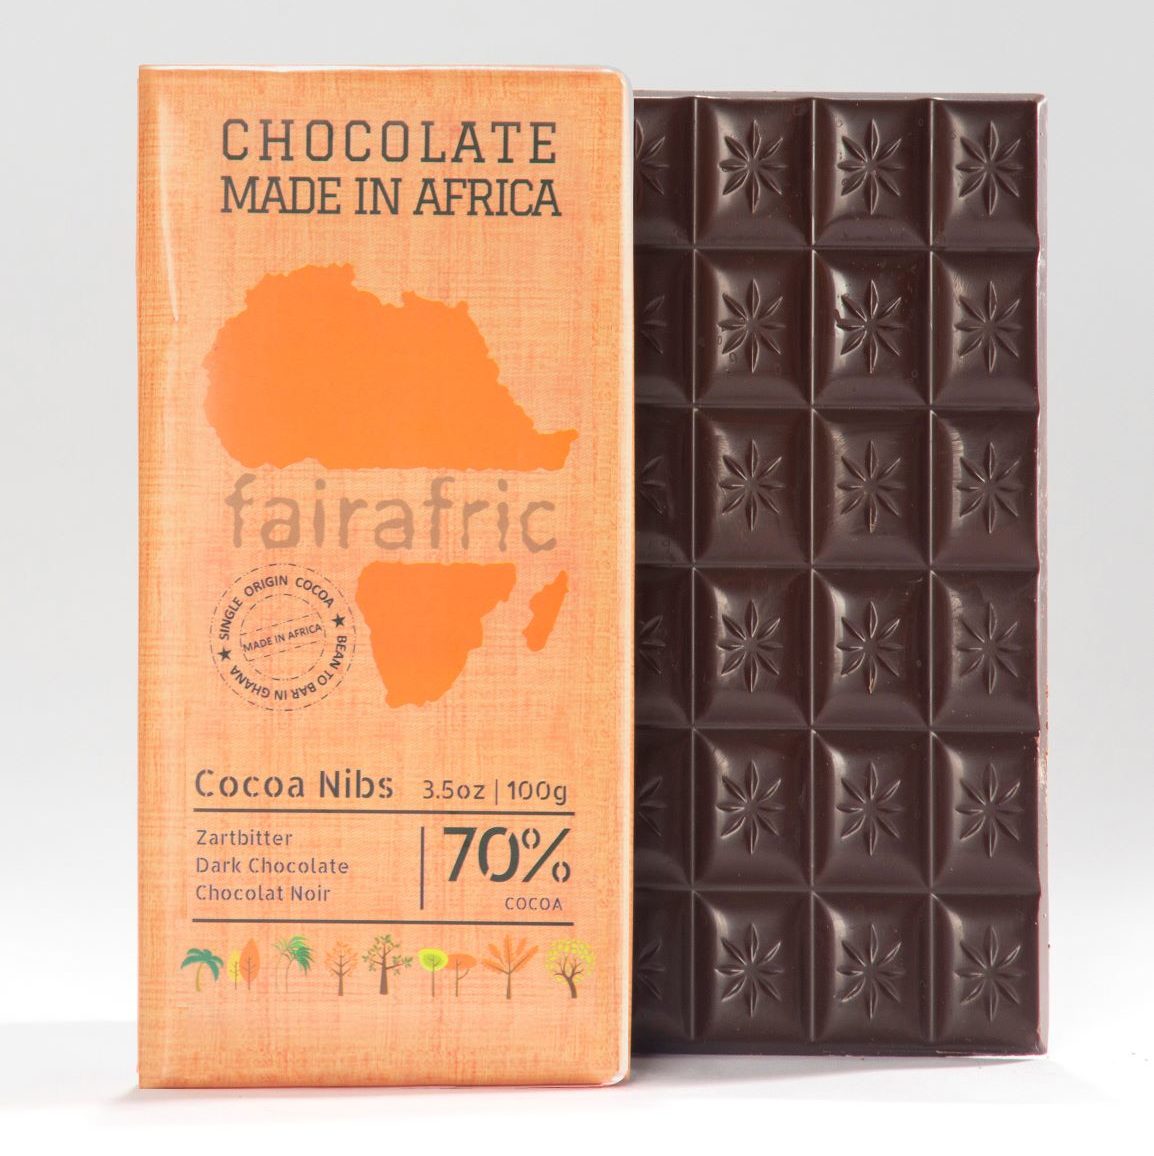 fairafric Zartbitterschokolade Kakaonibs 70%